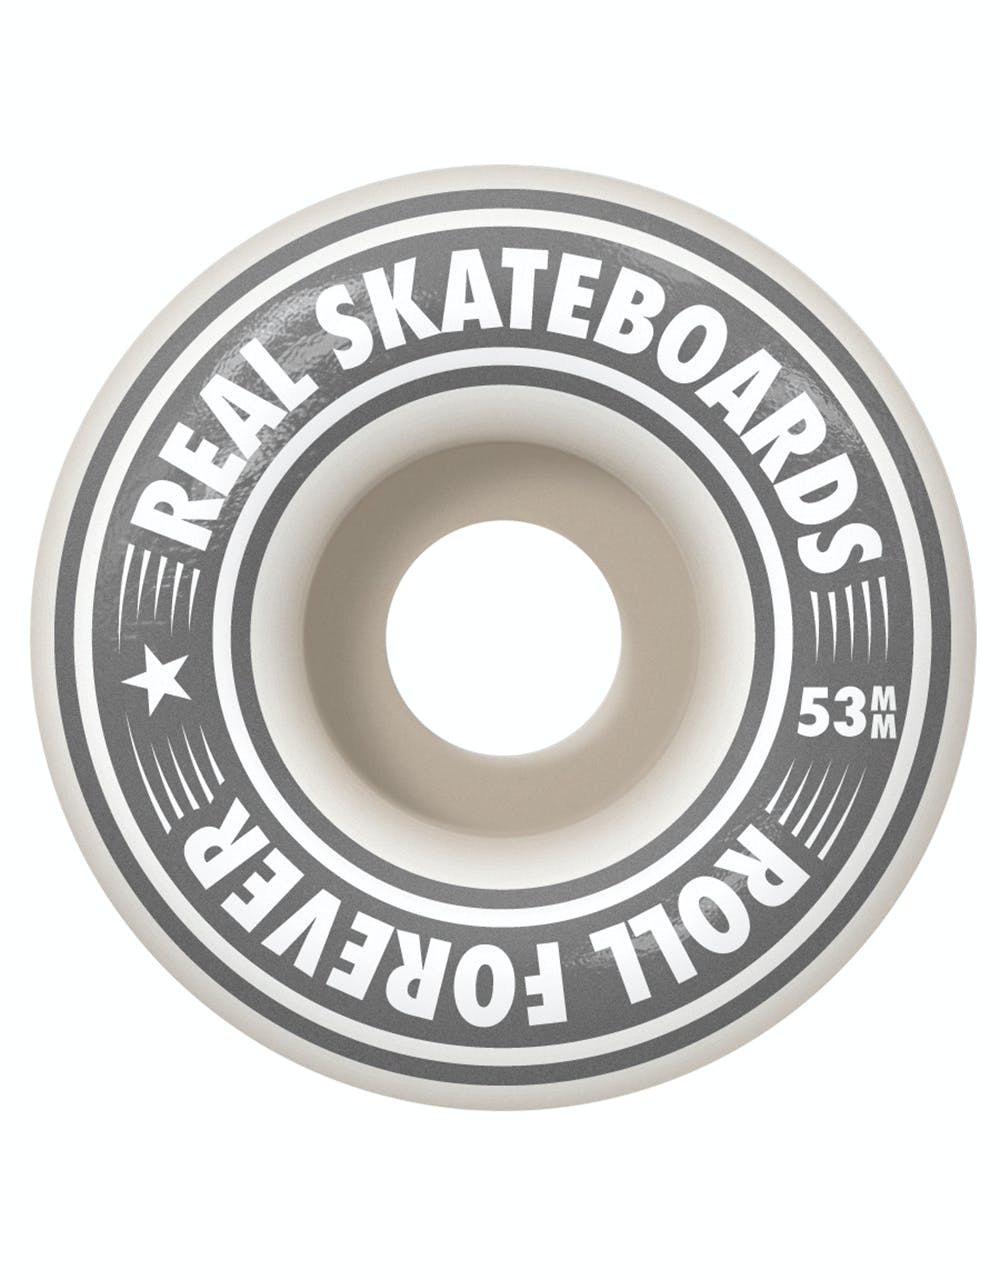 Real Oval Glitch Complete Skateboard - 8"